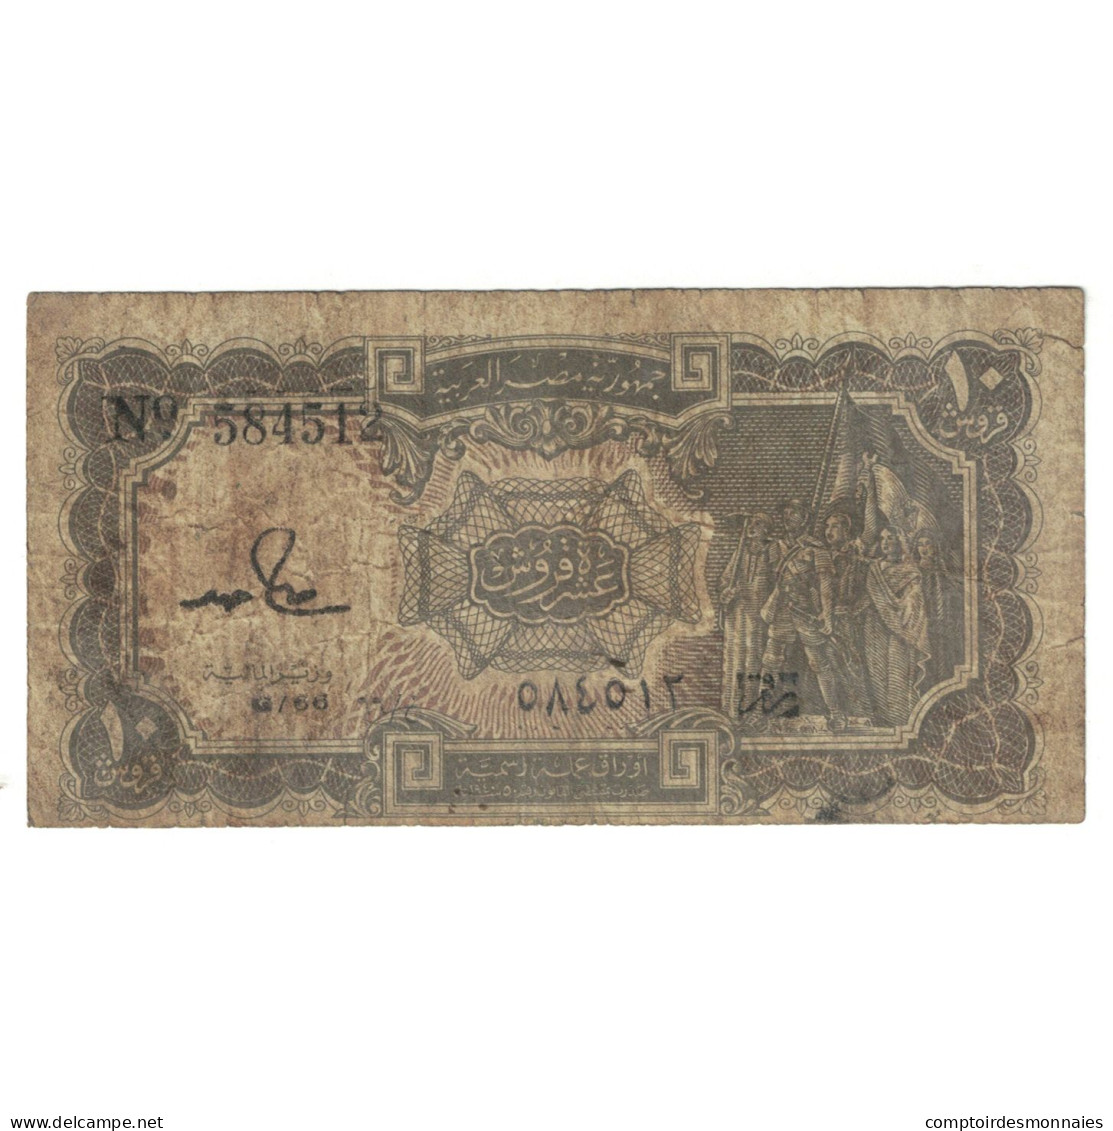 Billet, Égypte, 10 Piastres, L.1940, KM:183a, B - Egitto